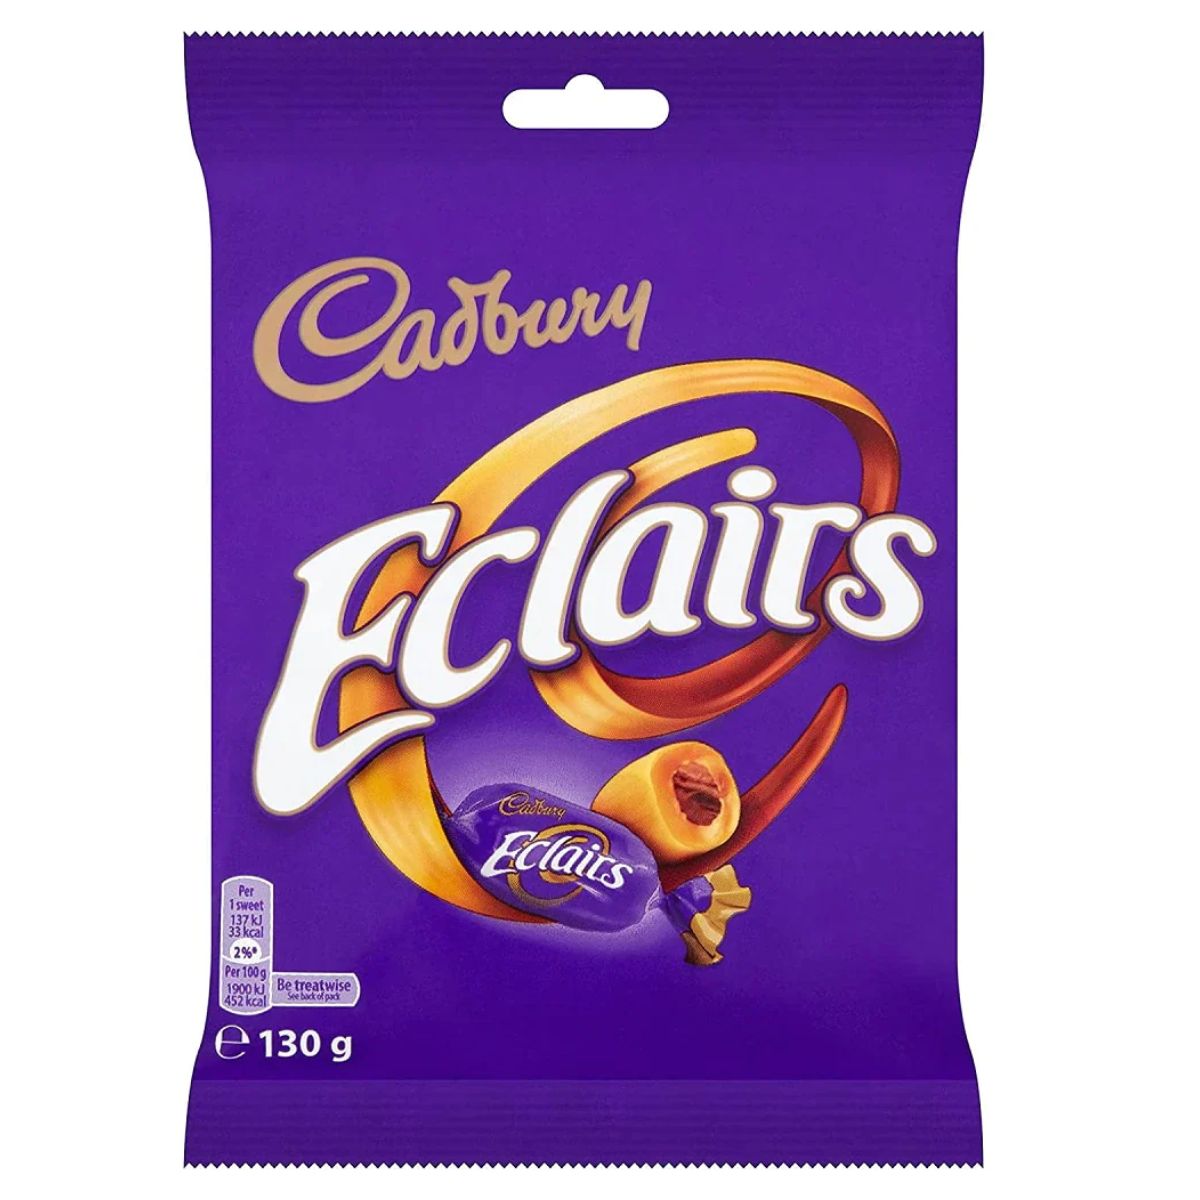 Cadbury - Eclairs Chocolate Bag - 130g in a bag.